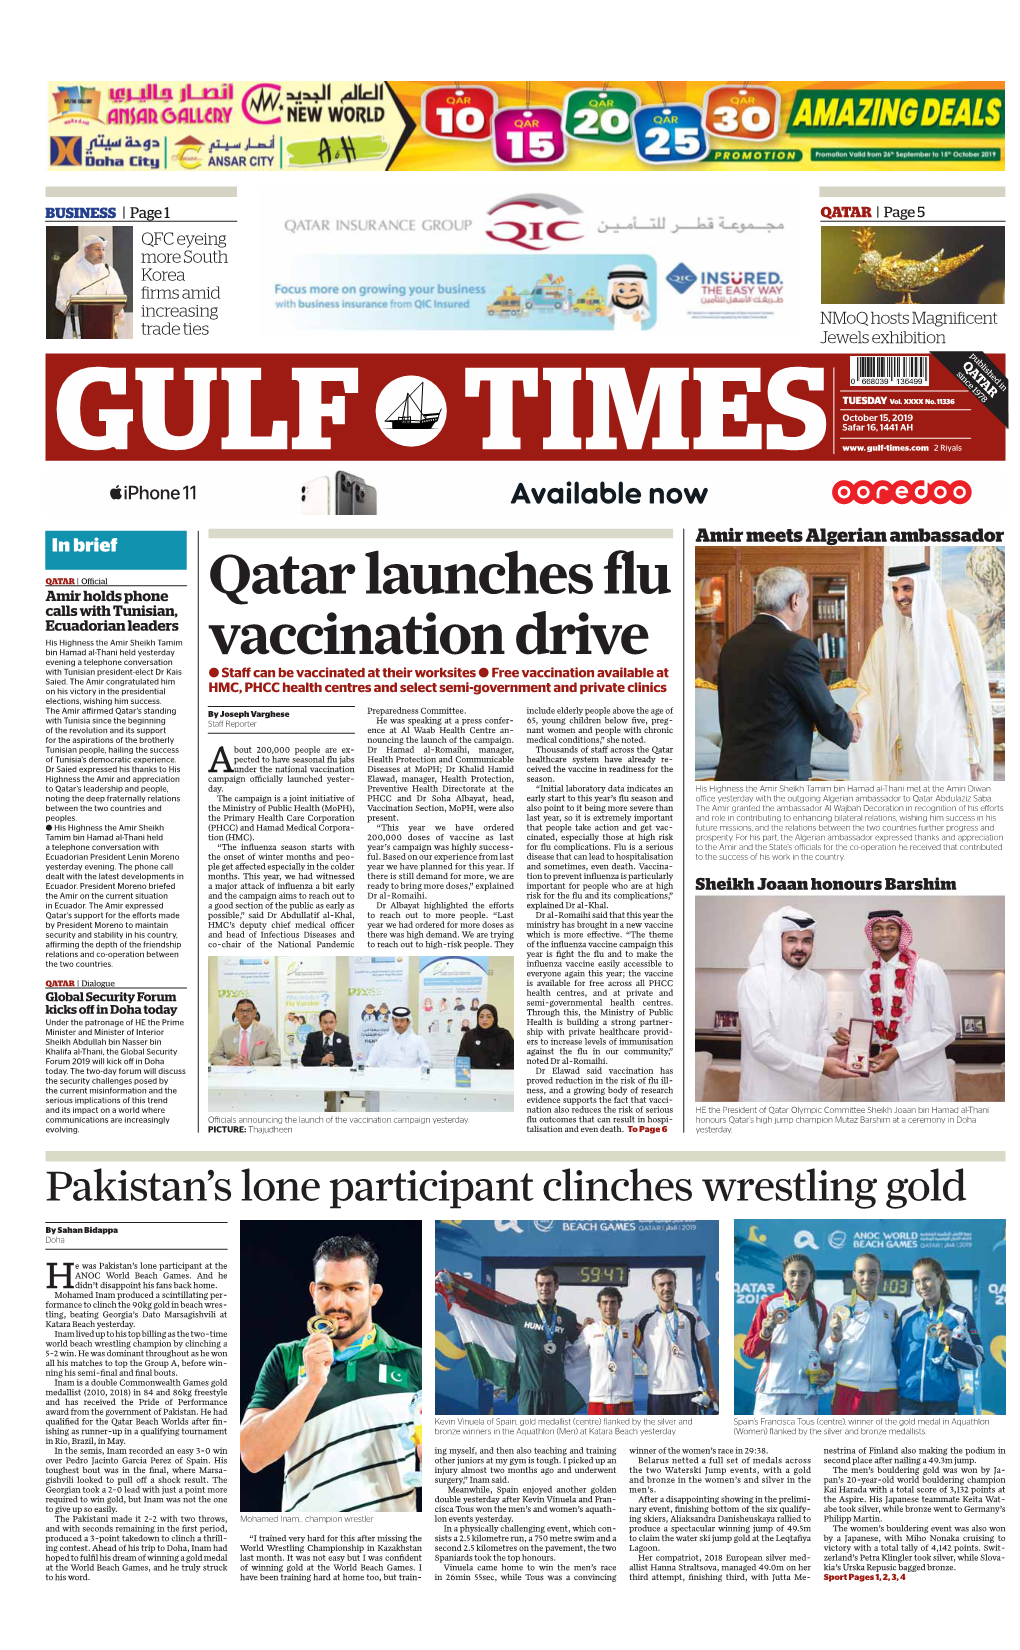 Qatar Launches Flu Vaccination Drive